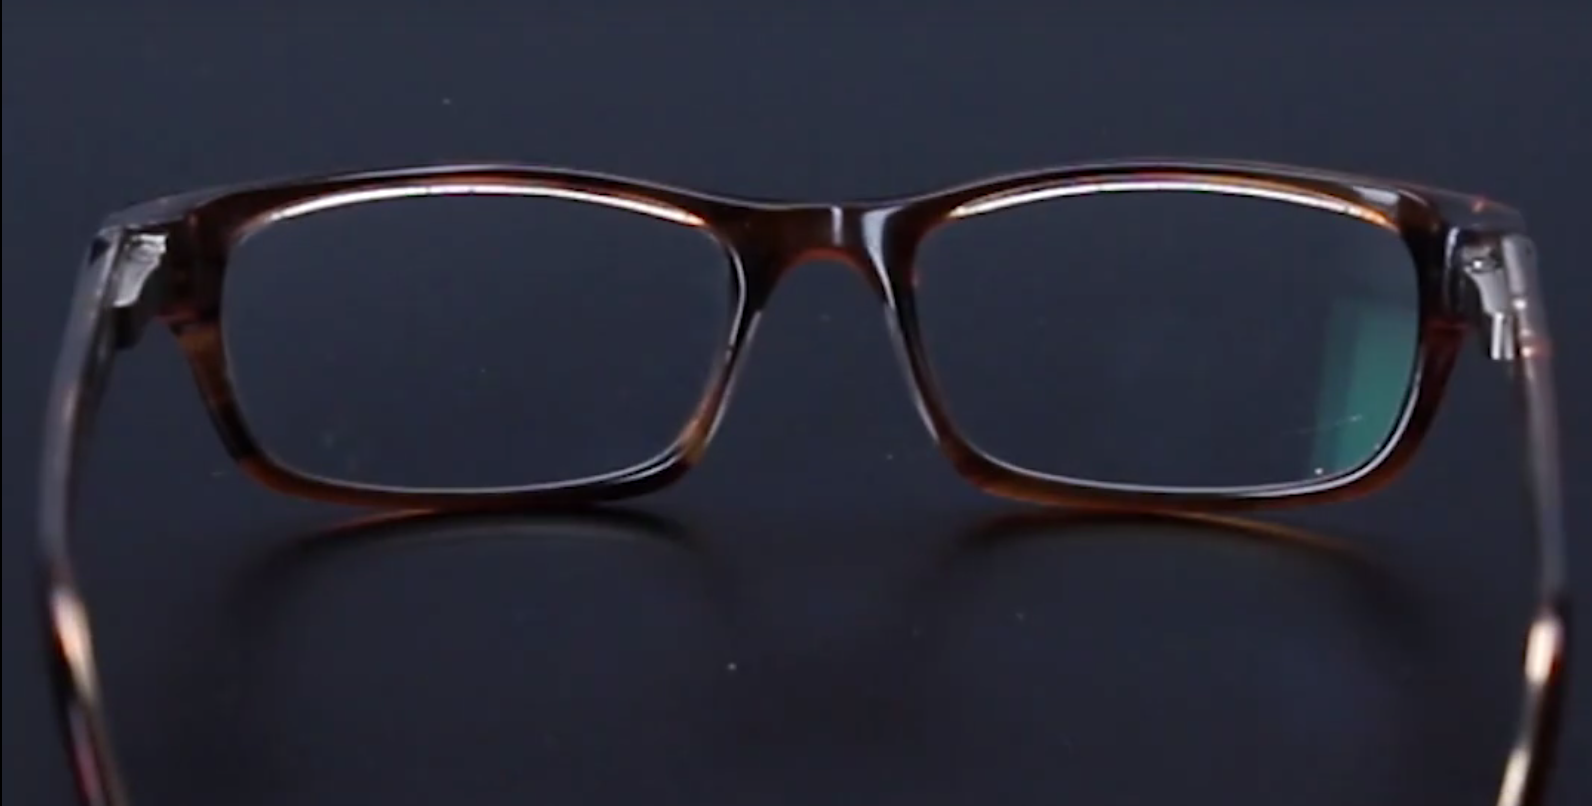 Evita que tus gafas se empañen utilizando este sencillo truco, ¡funciona!